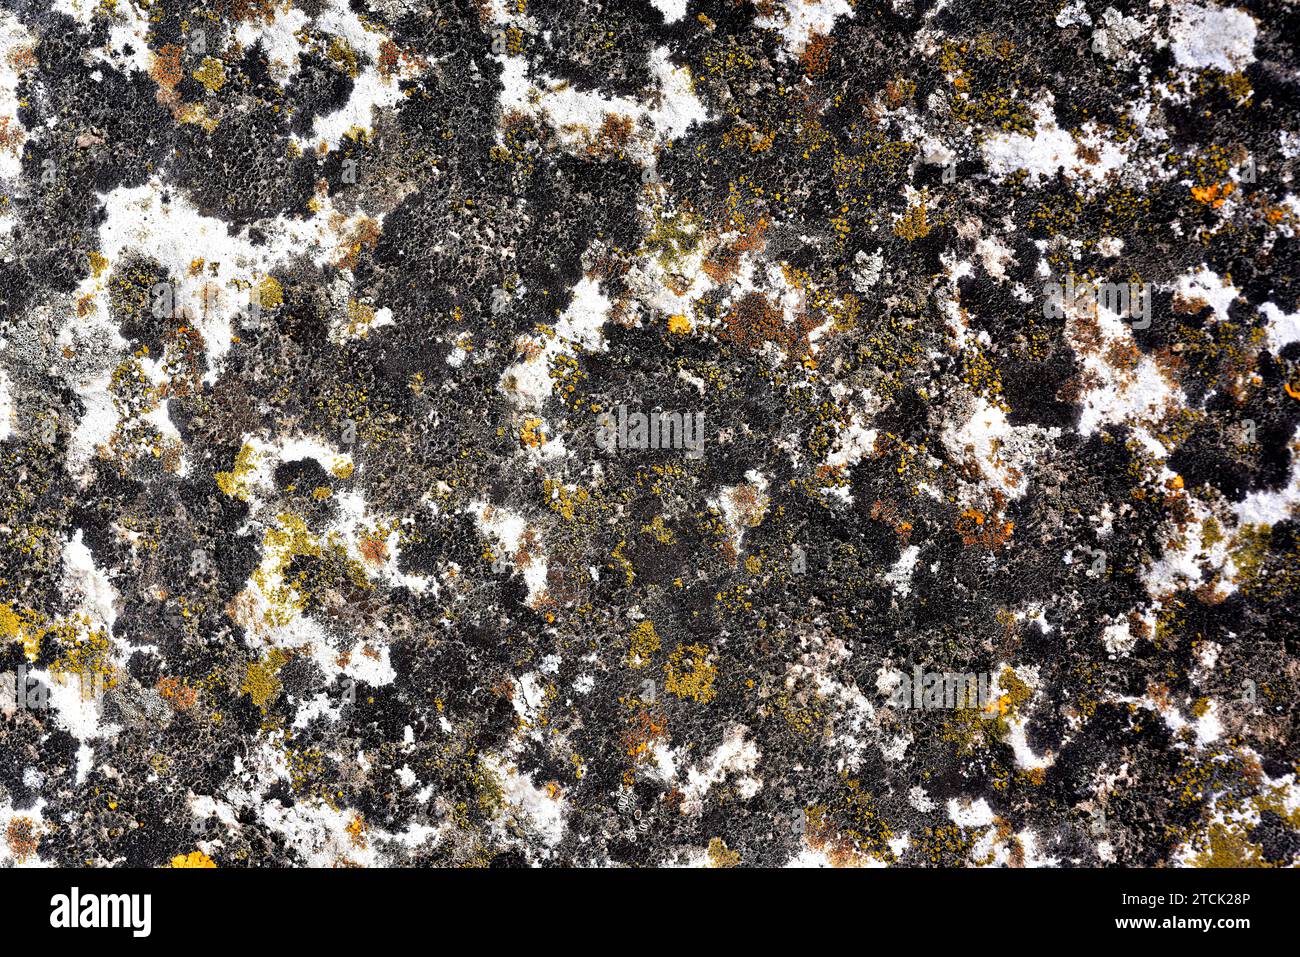 Crustose lichen community with Verrucaria nigrescens (black), Aspicilia calcarea (grey), Caloplaca holocarpa (orange) and Candelariella aurella (yello Stock Photo